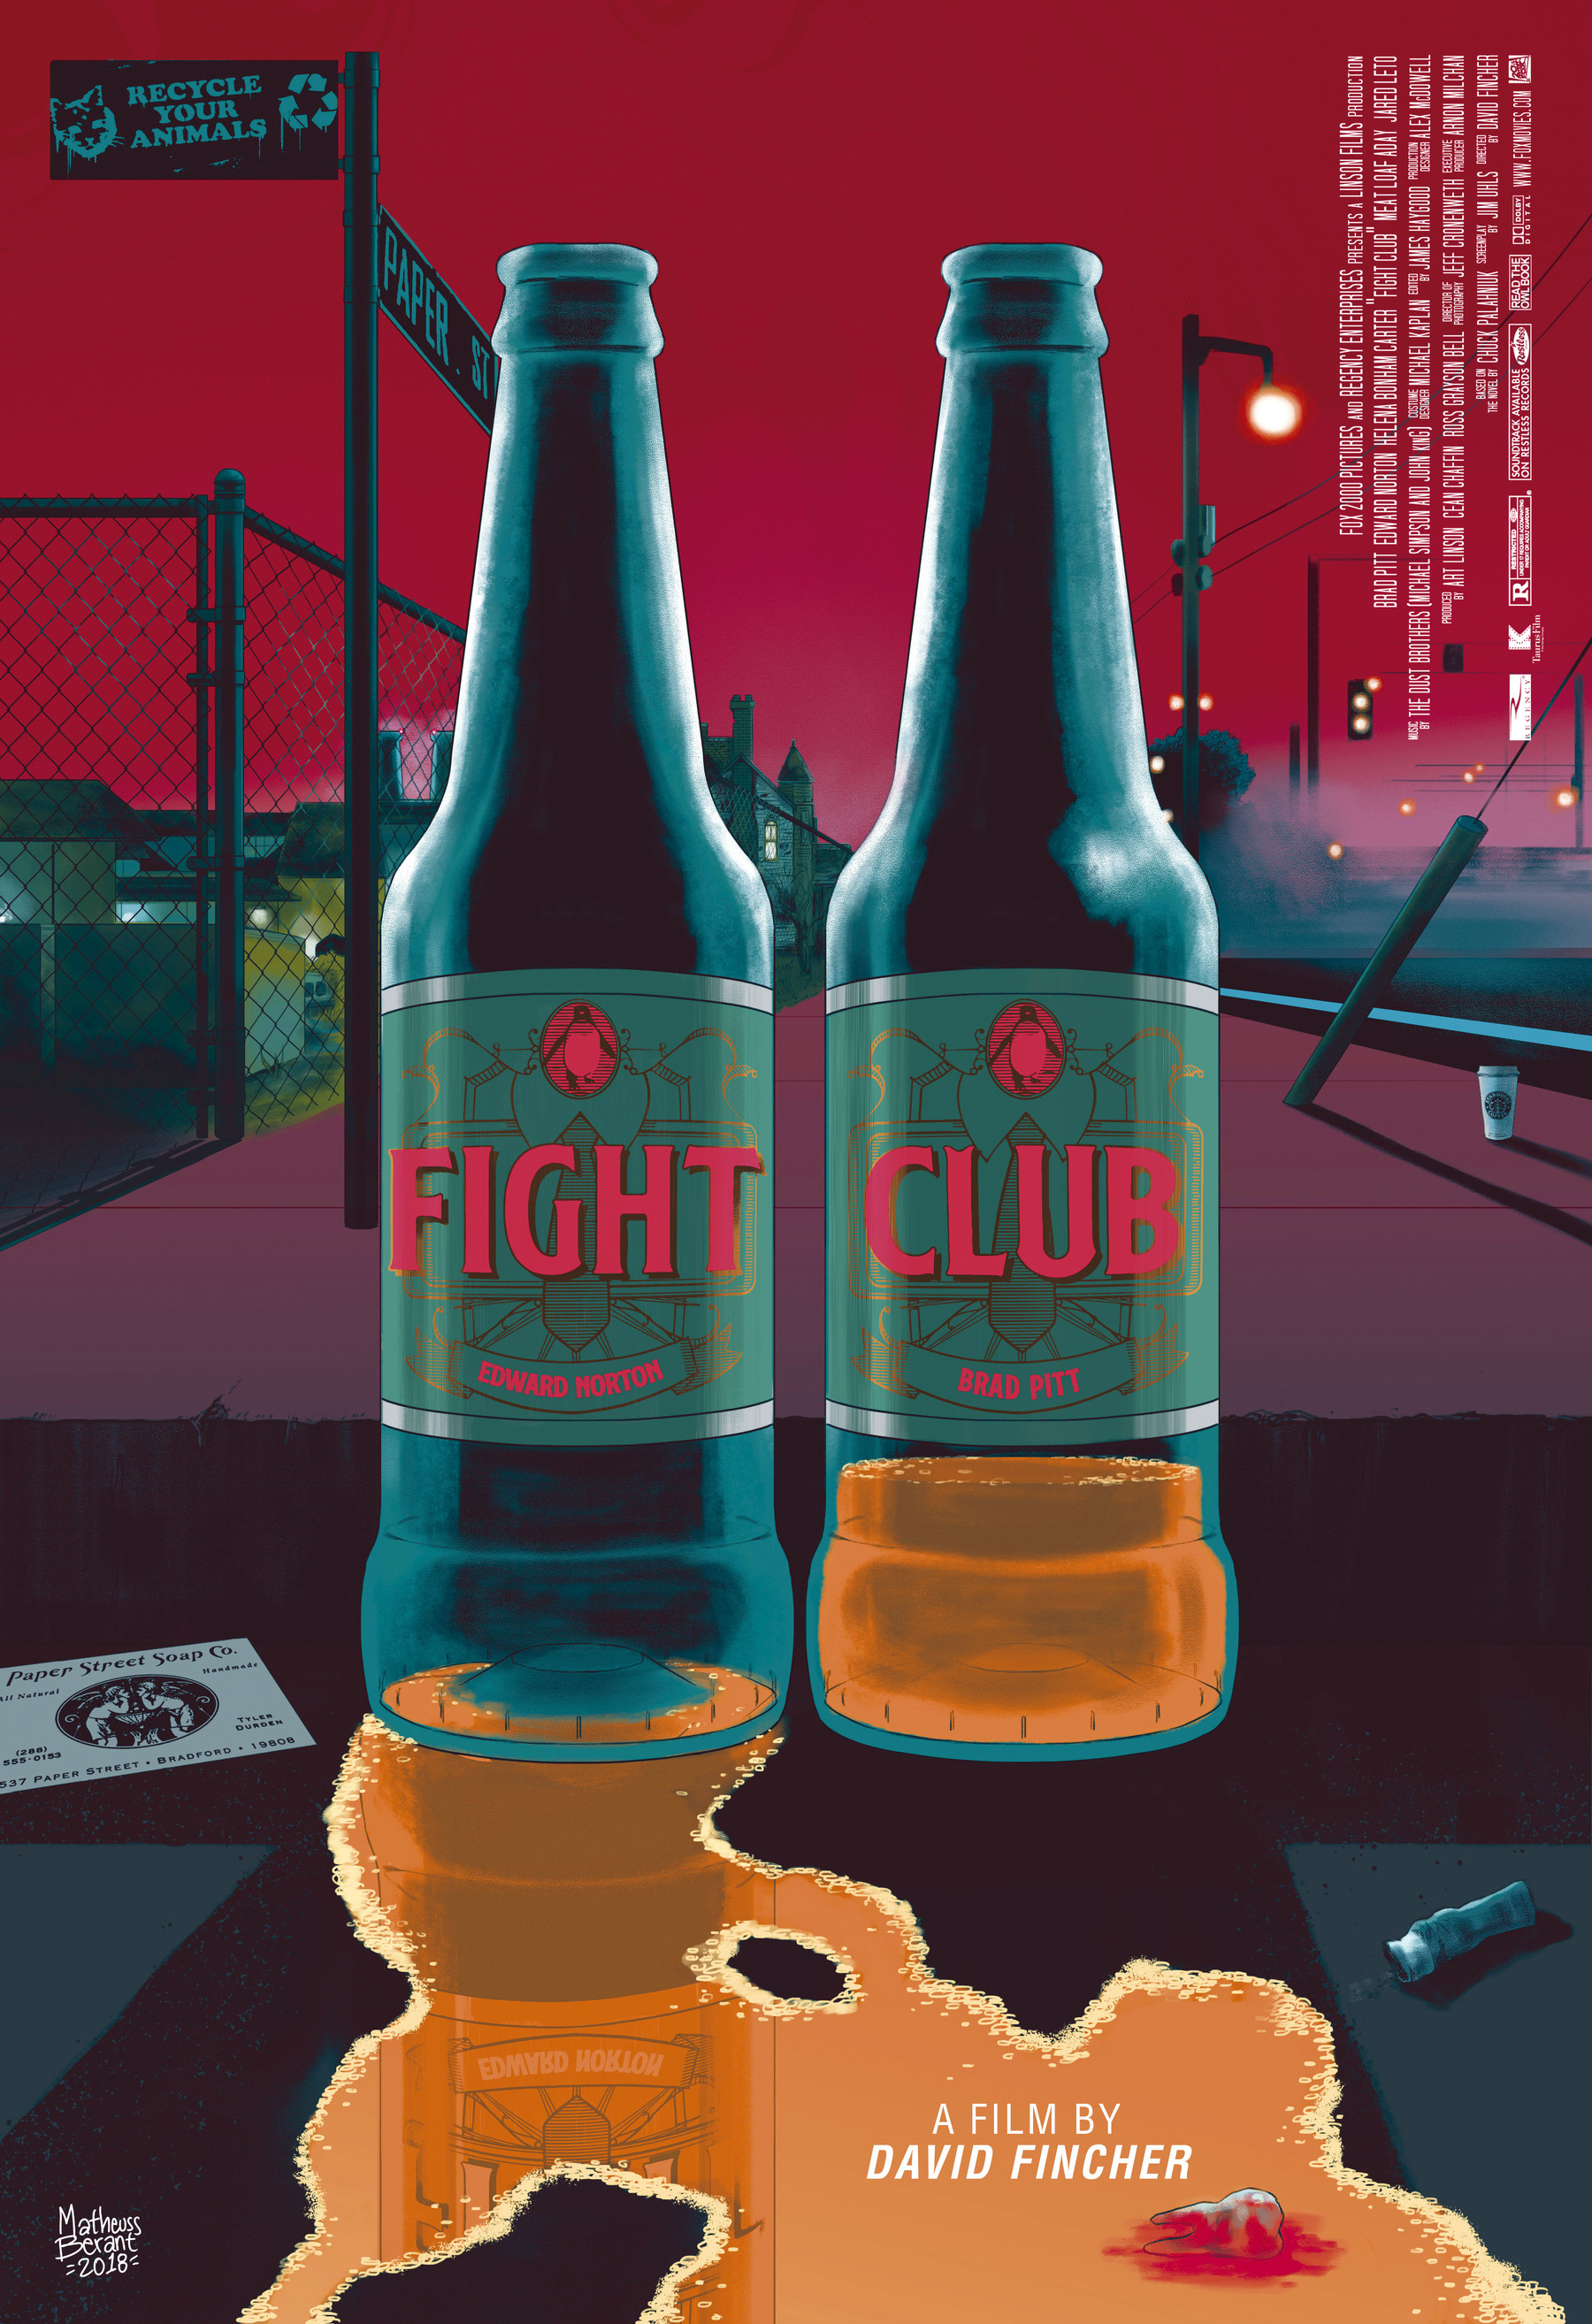 ArtStation - Fight club poster like artwork